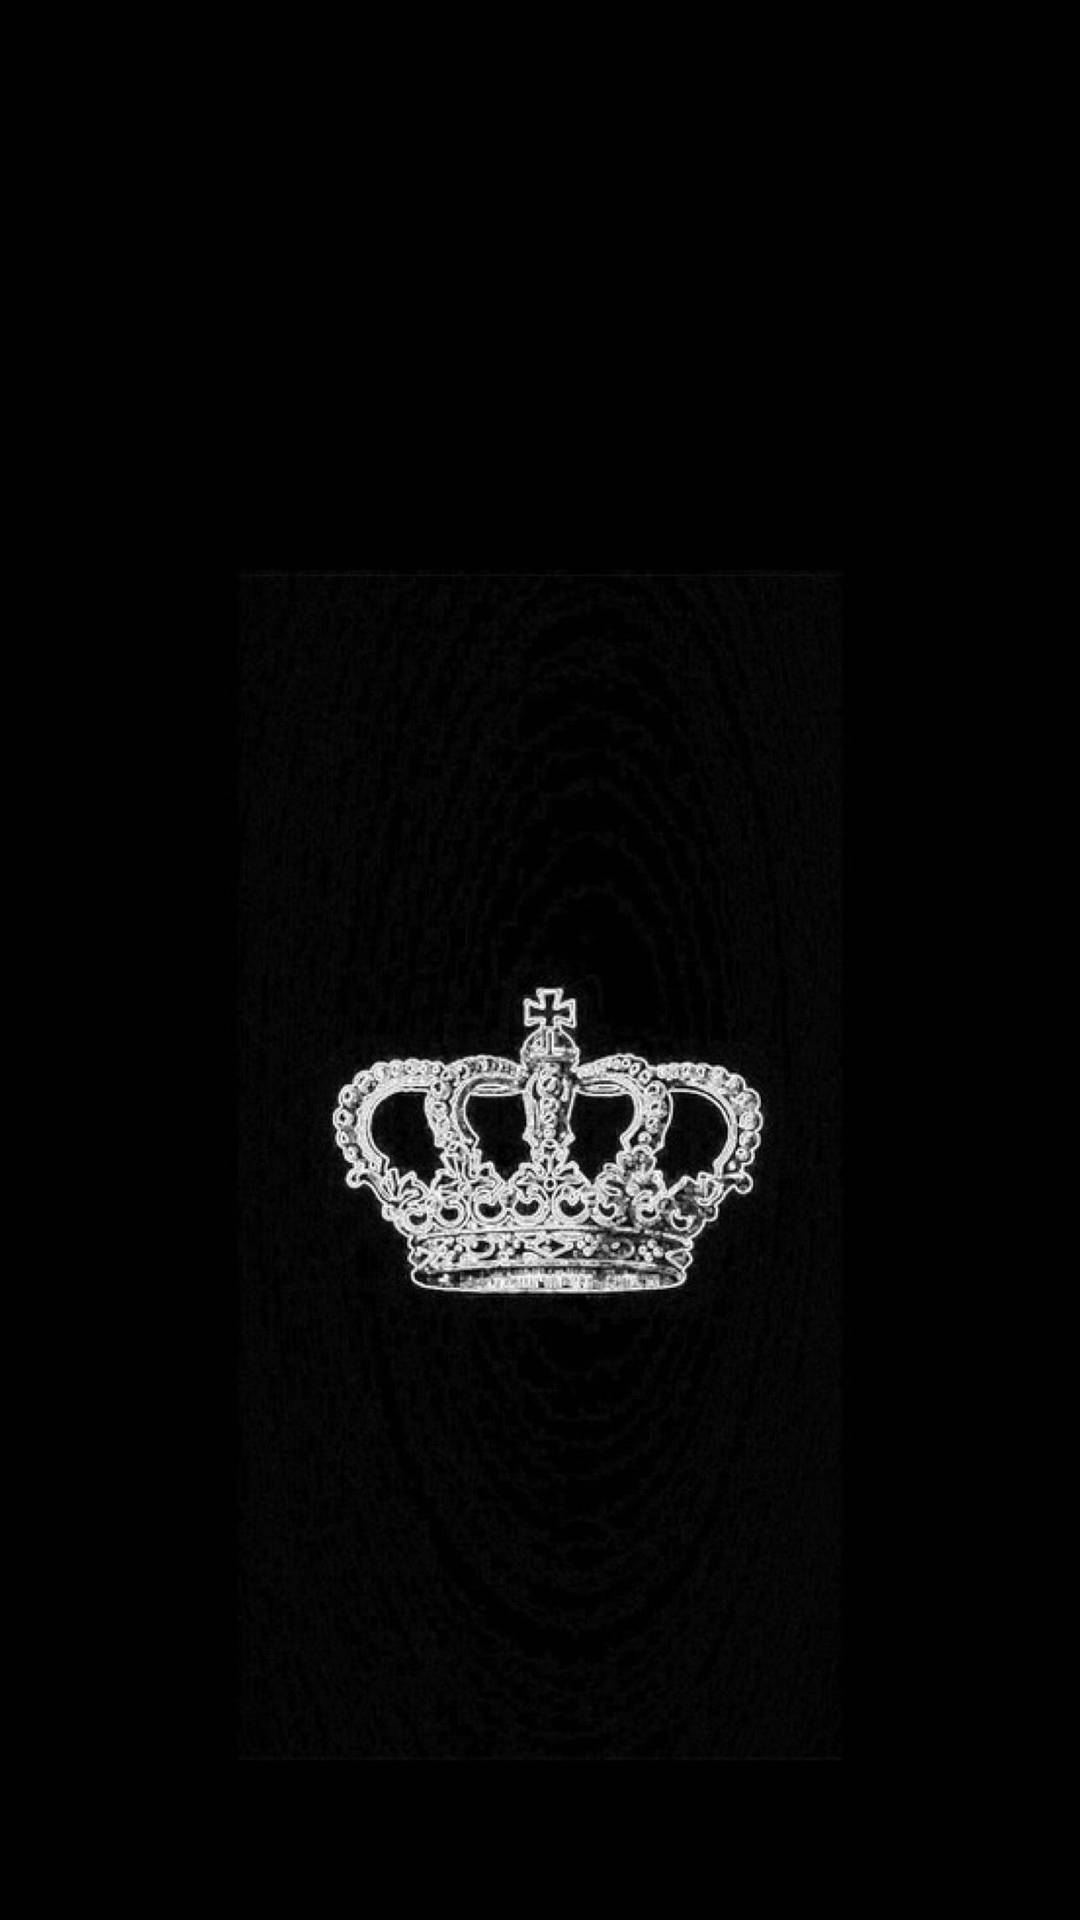 Magnificent Black King Crown Wallpaper